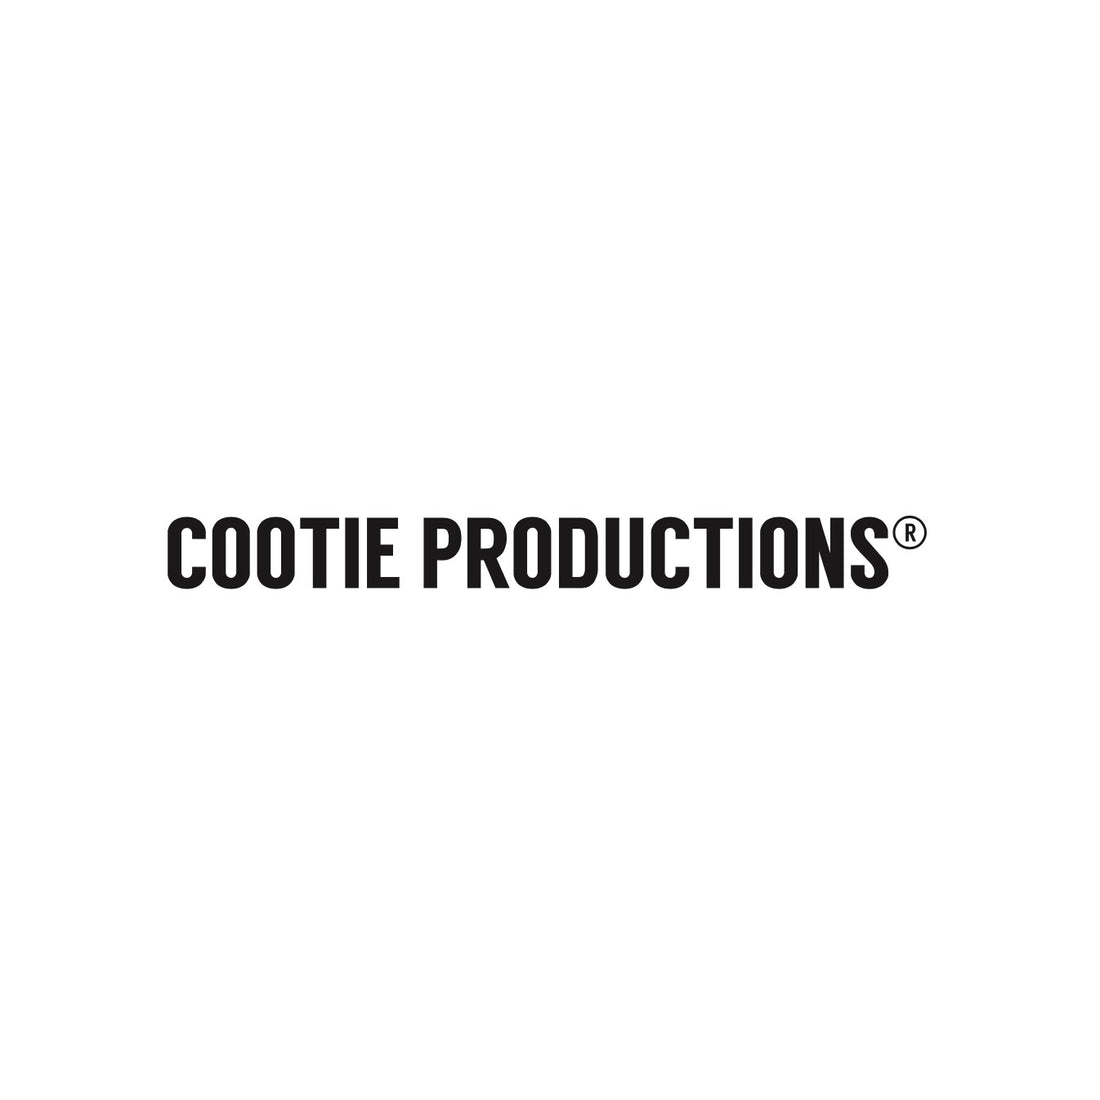 【TAT 2階】   COOTIE PRODUCTIONS 1月14日 土曜日 12:00 発売開始。